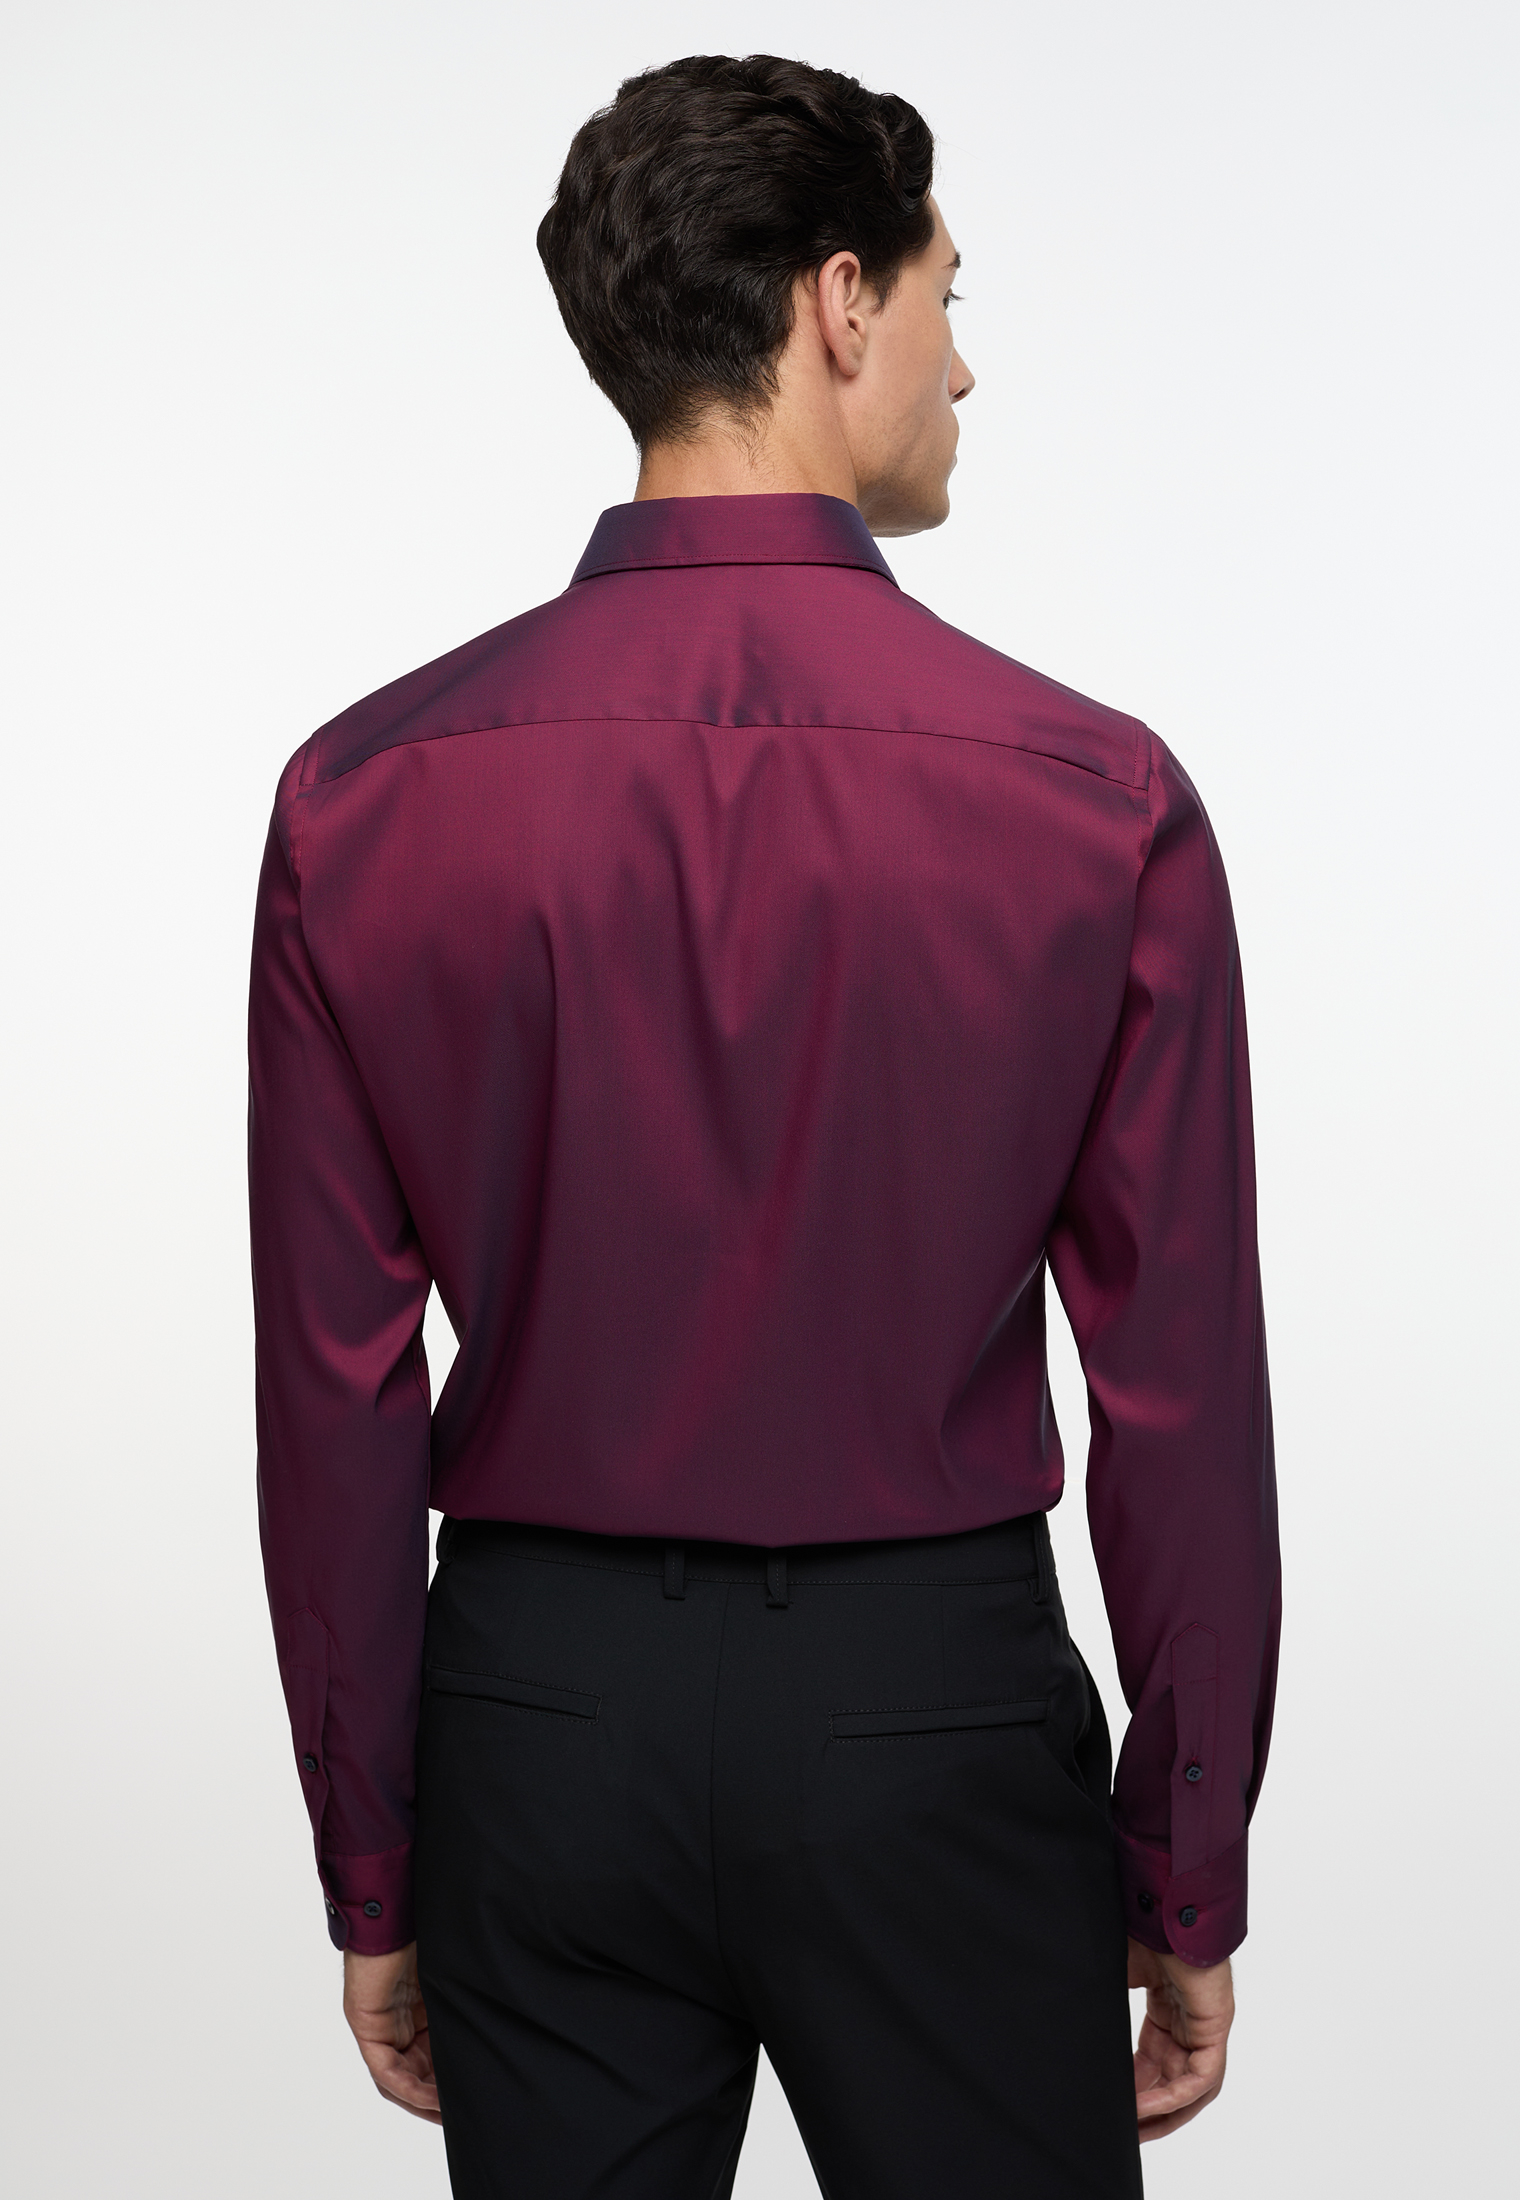 SLIM FIT Performance Shirt in burgunder unifarben | burgunder | 39 |  Langarm | 1SH02217-05-81-39-1/1